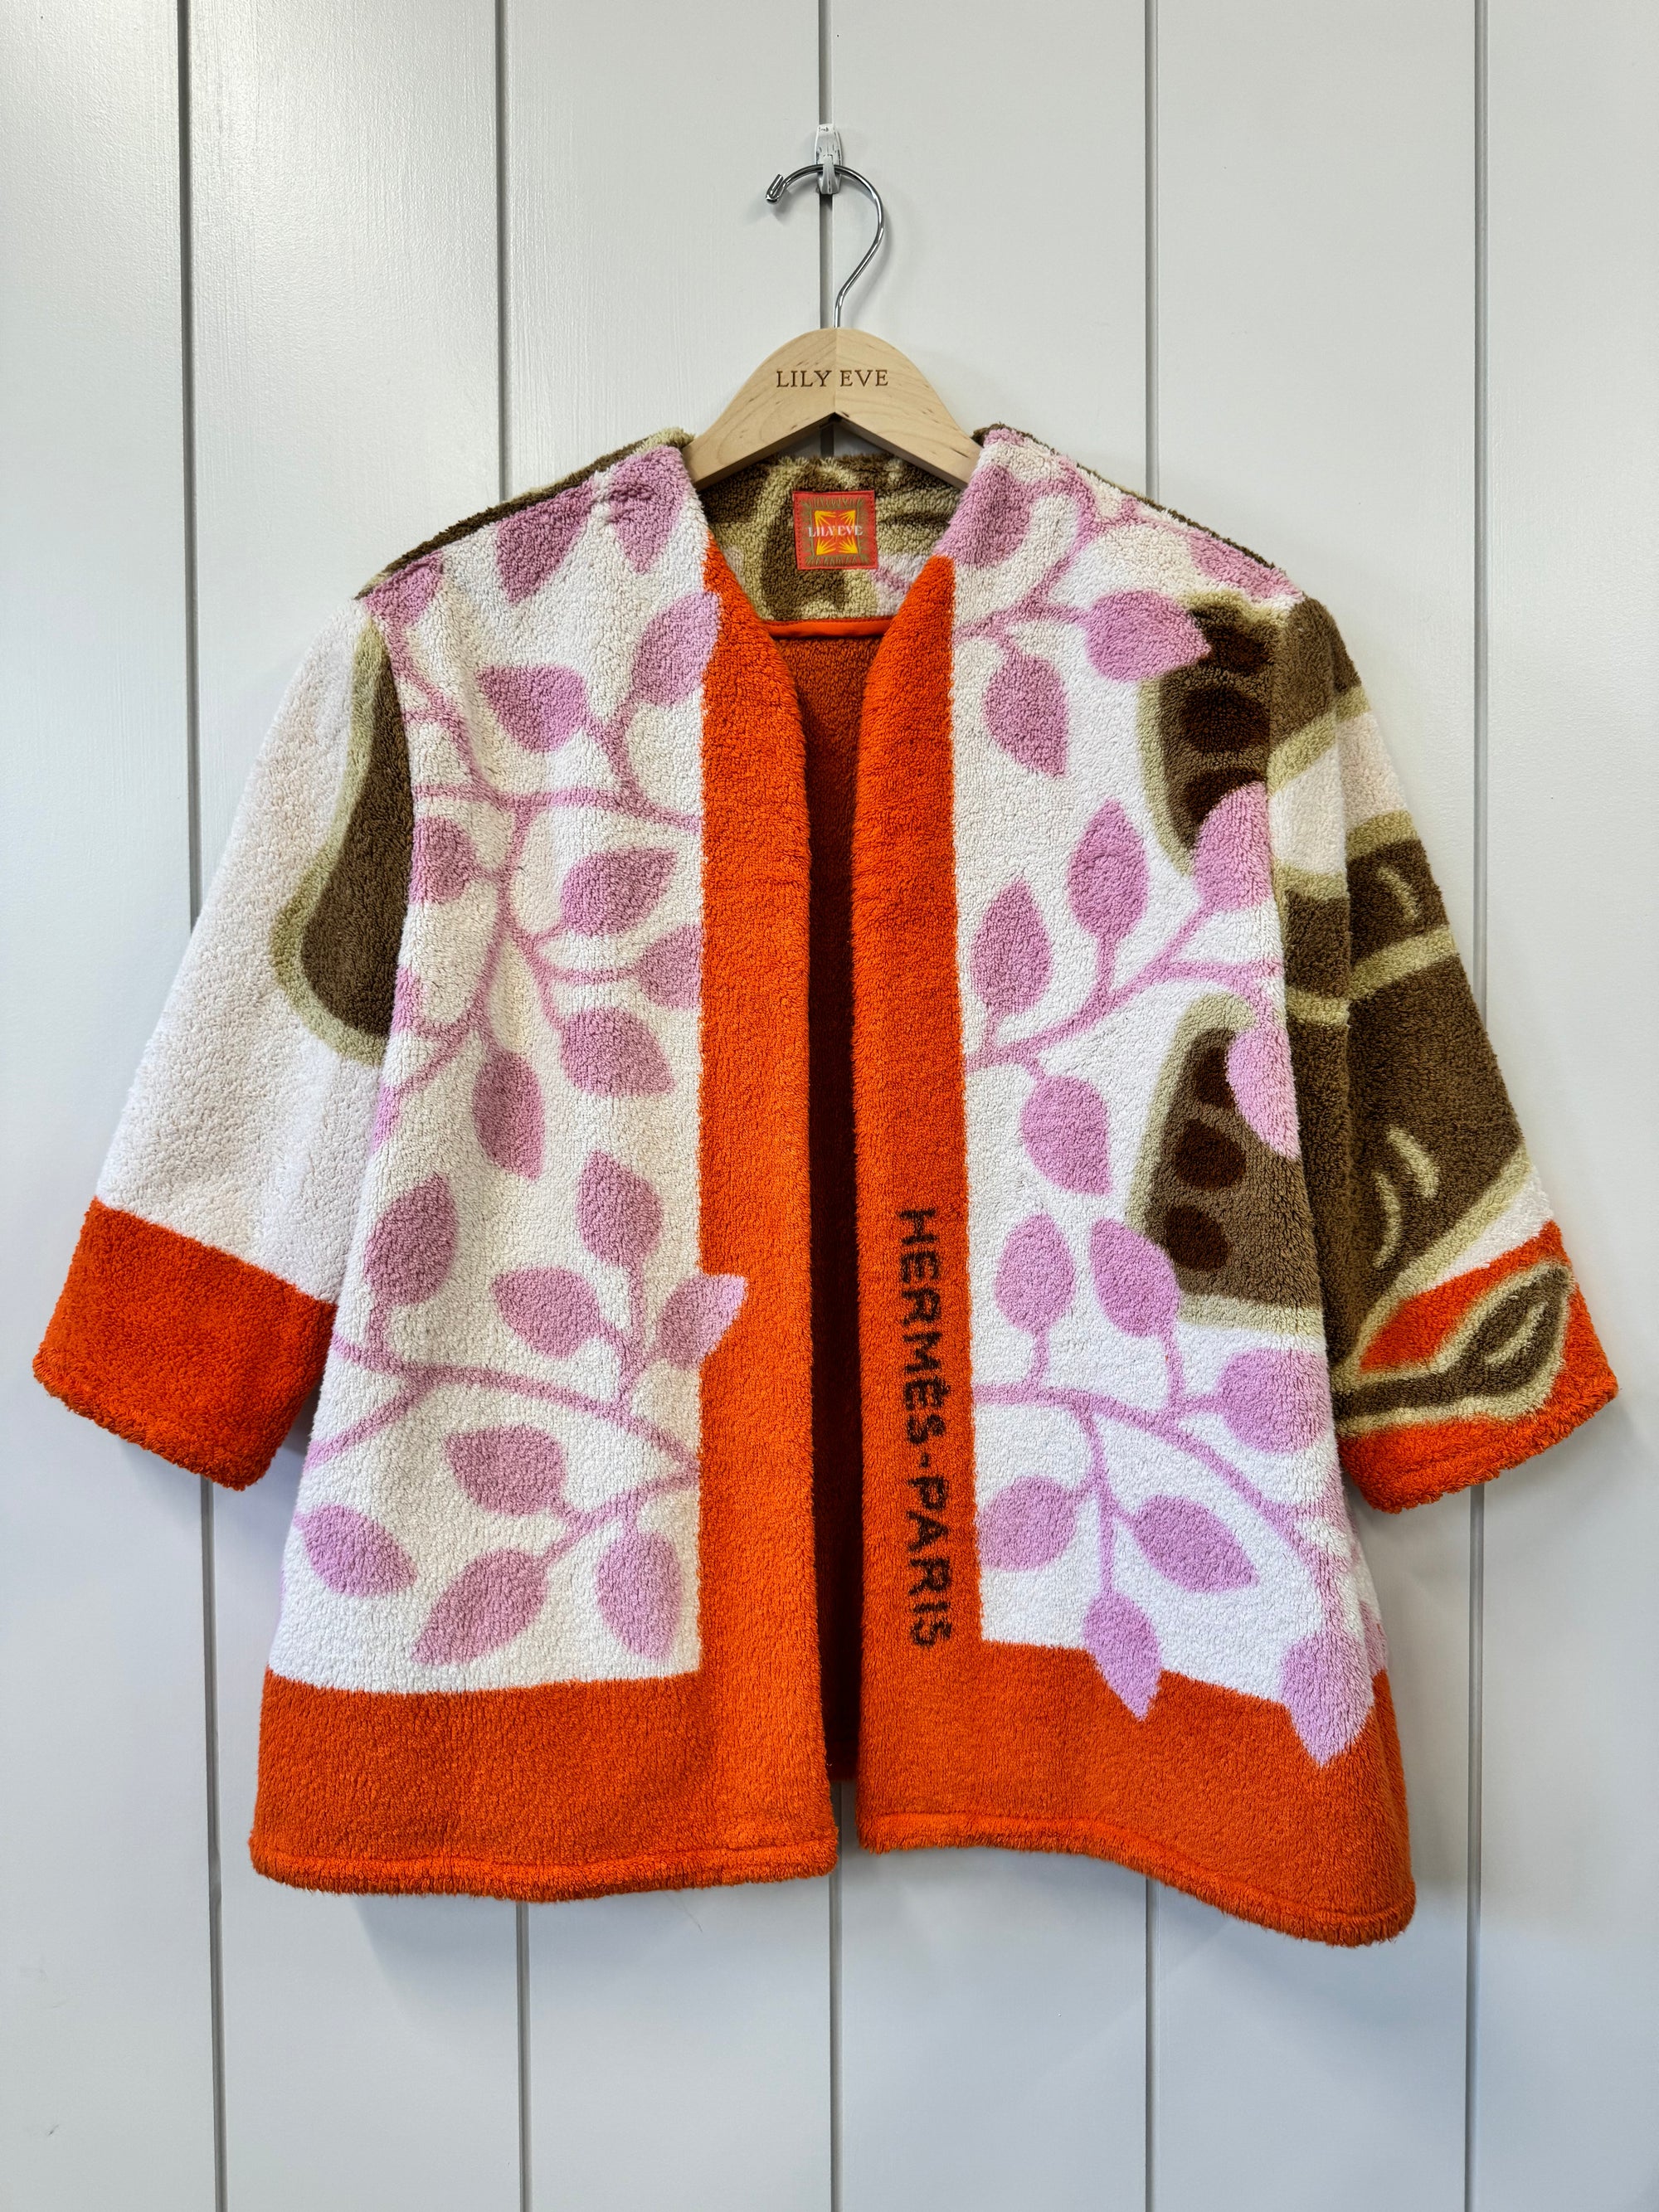 The Pink Elephant Jacket